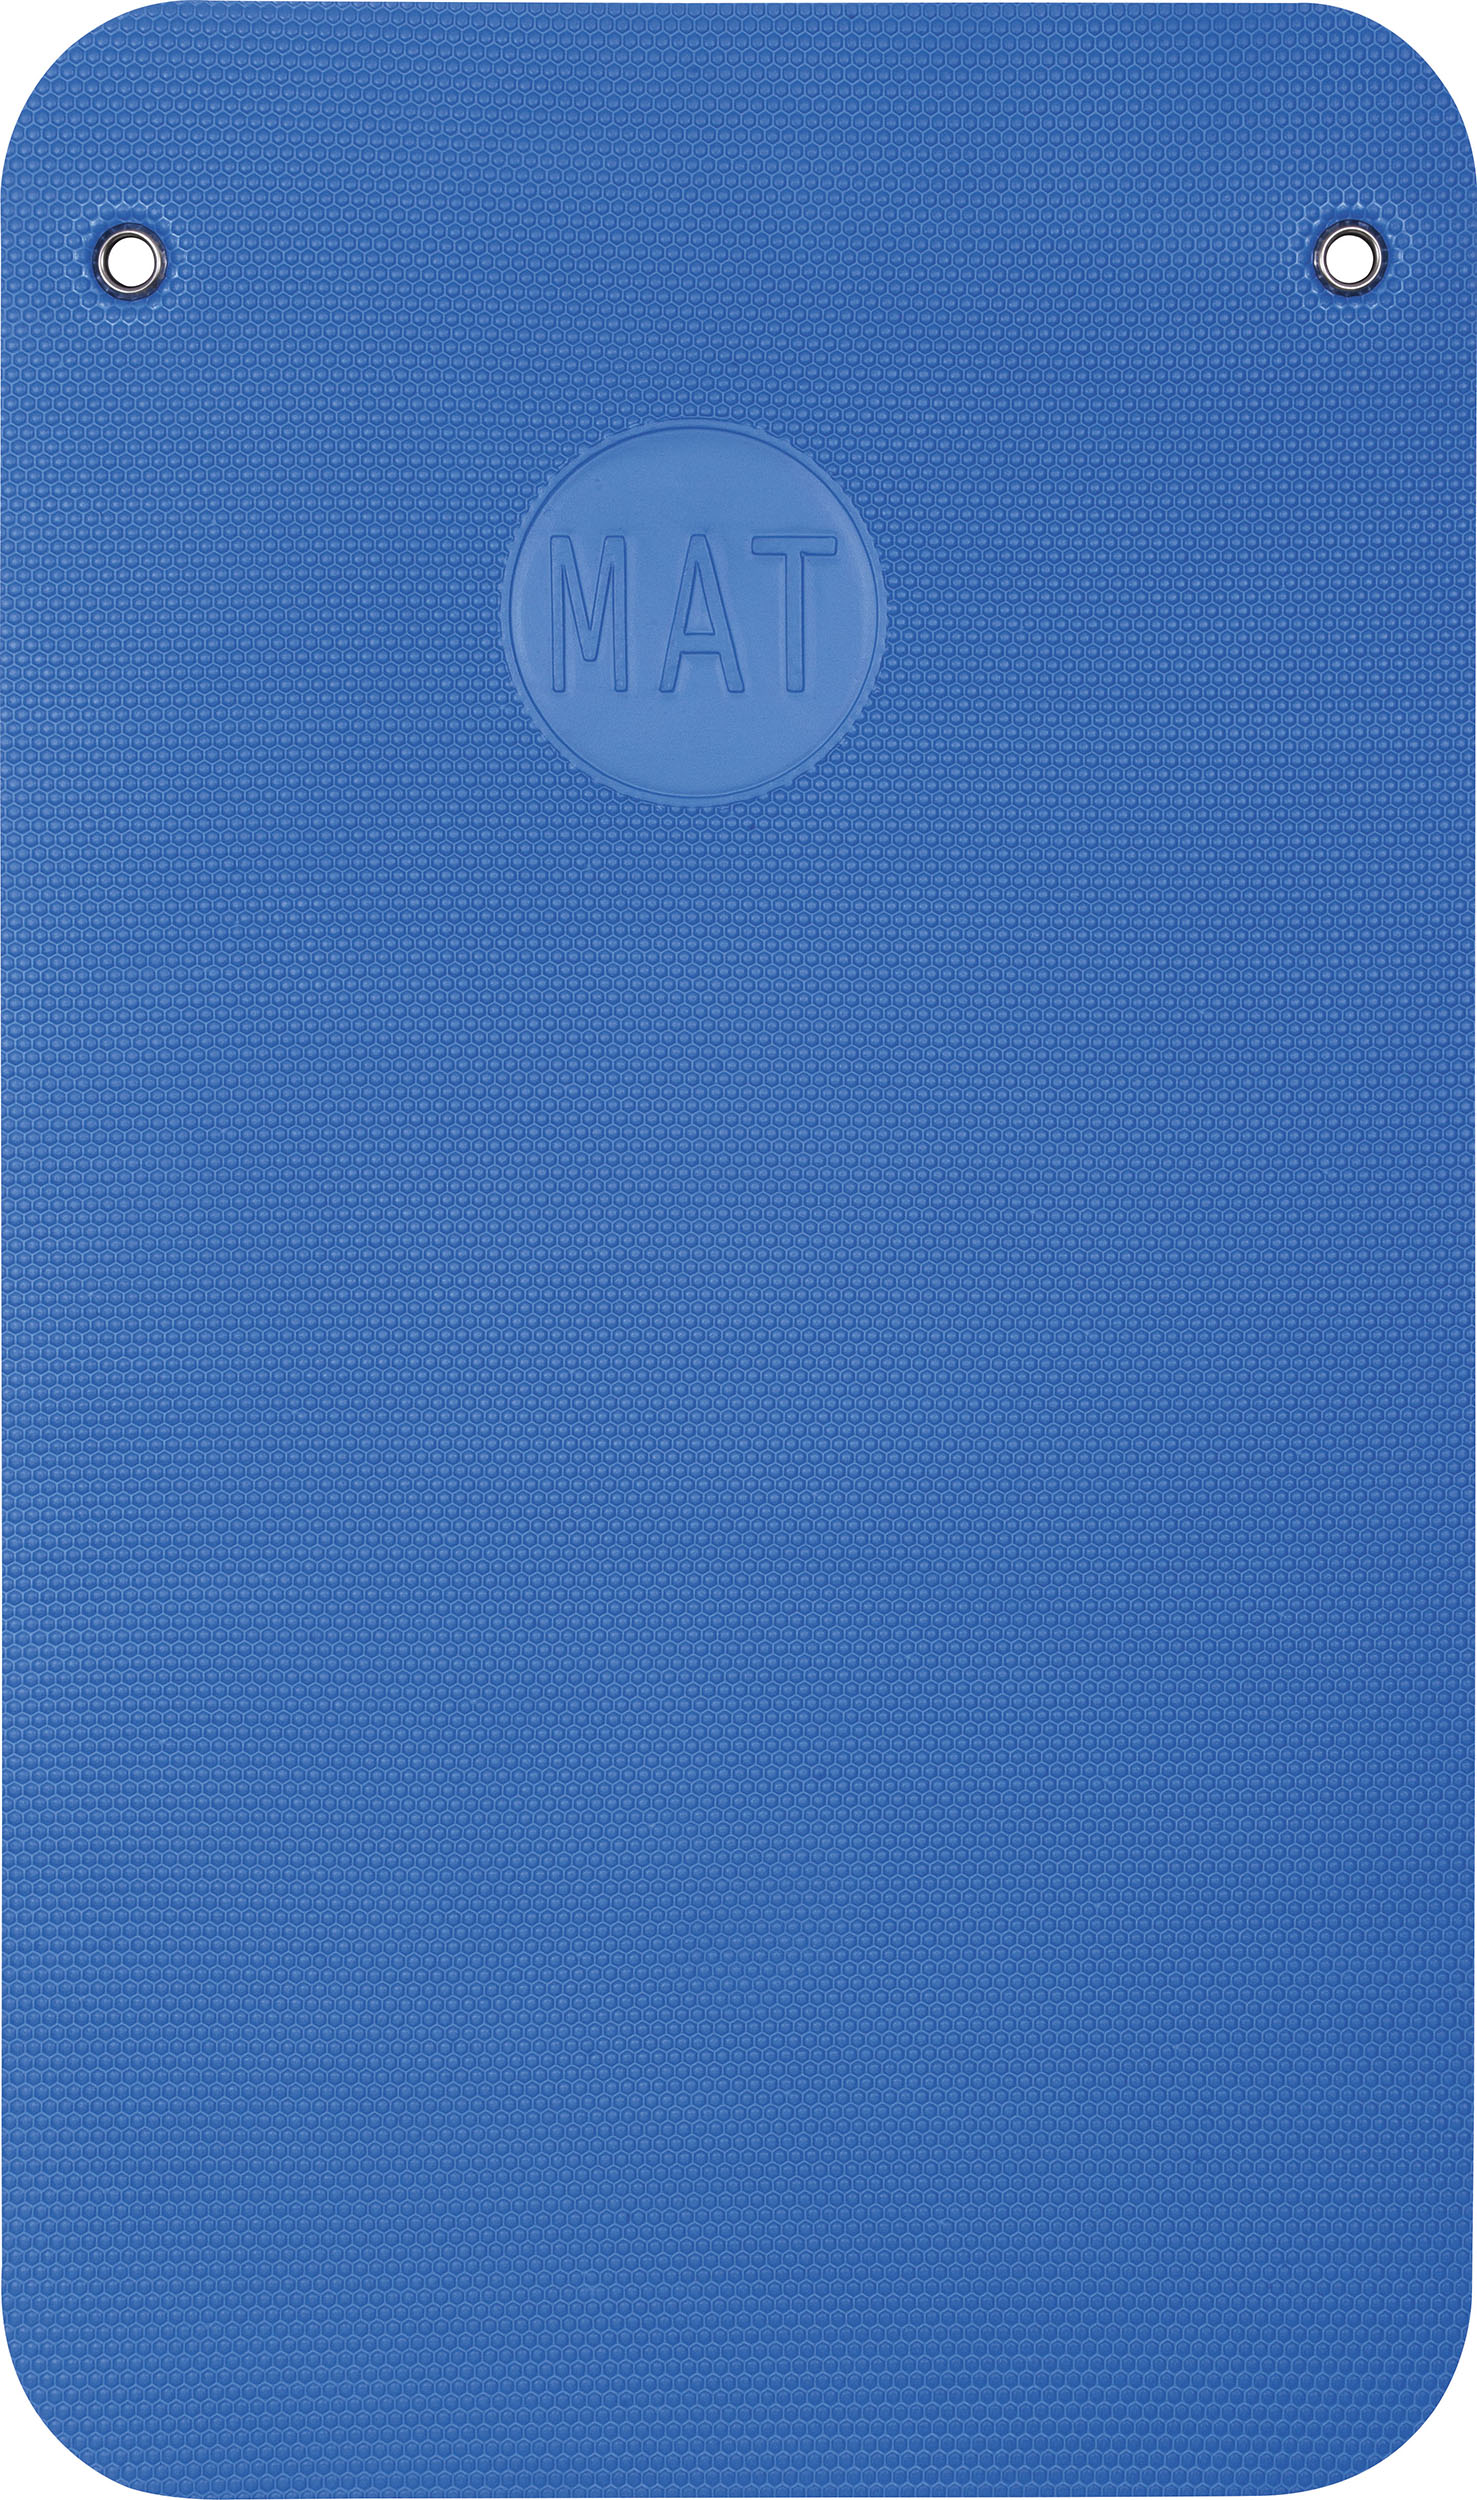 Amila Στρωμα Eva Με Κρικους Μπλε Μονοκοματο 15Mm 100X60Cm (81740)